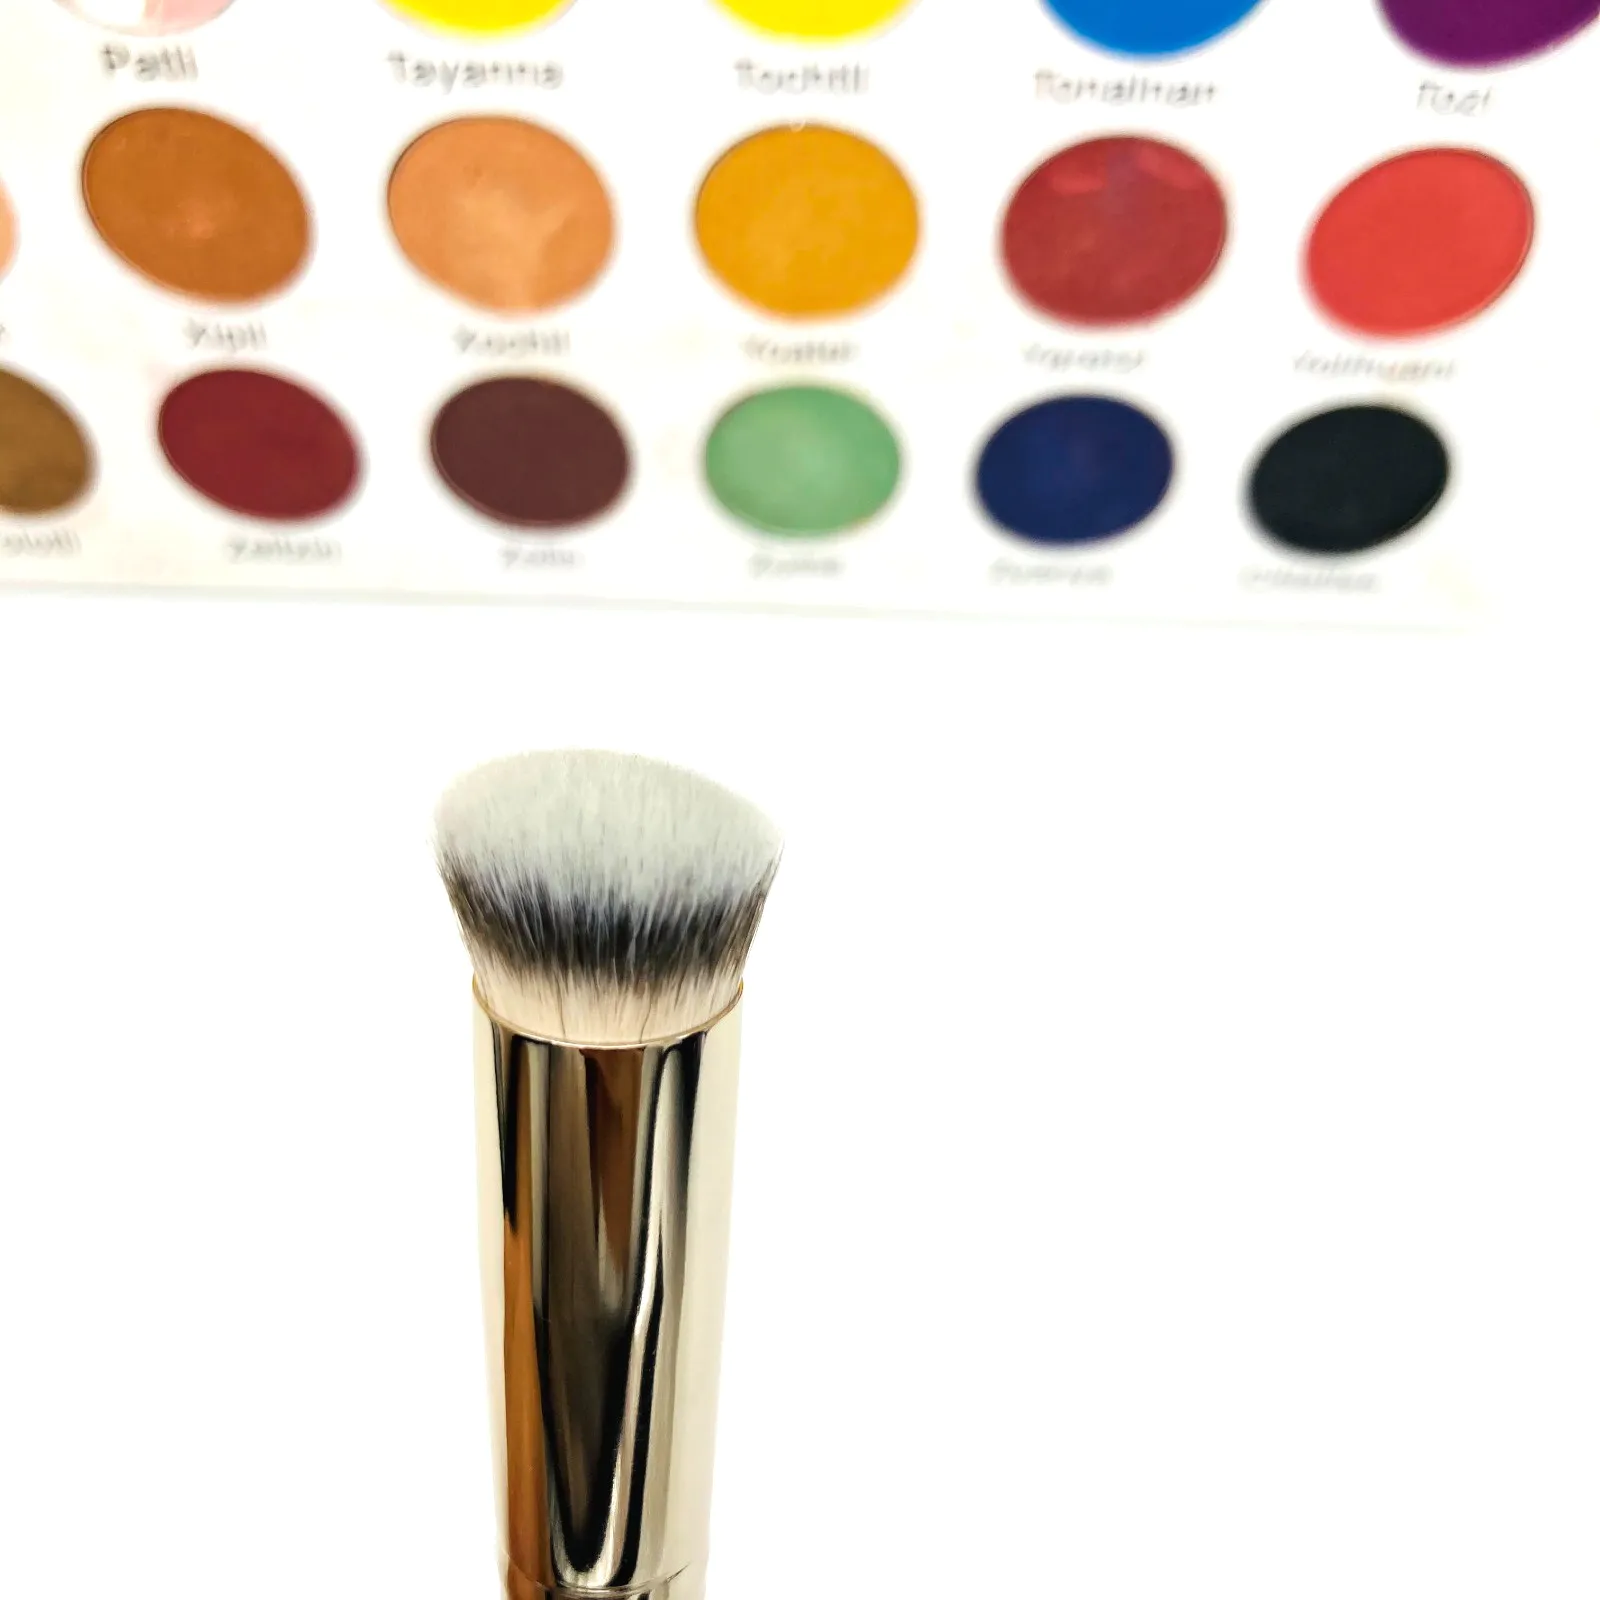 Suprabeauty high quality beauty cosmetics brushes wholesale bulk buy